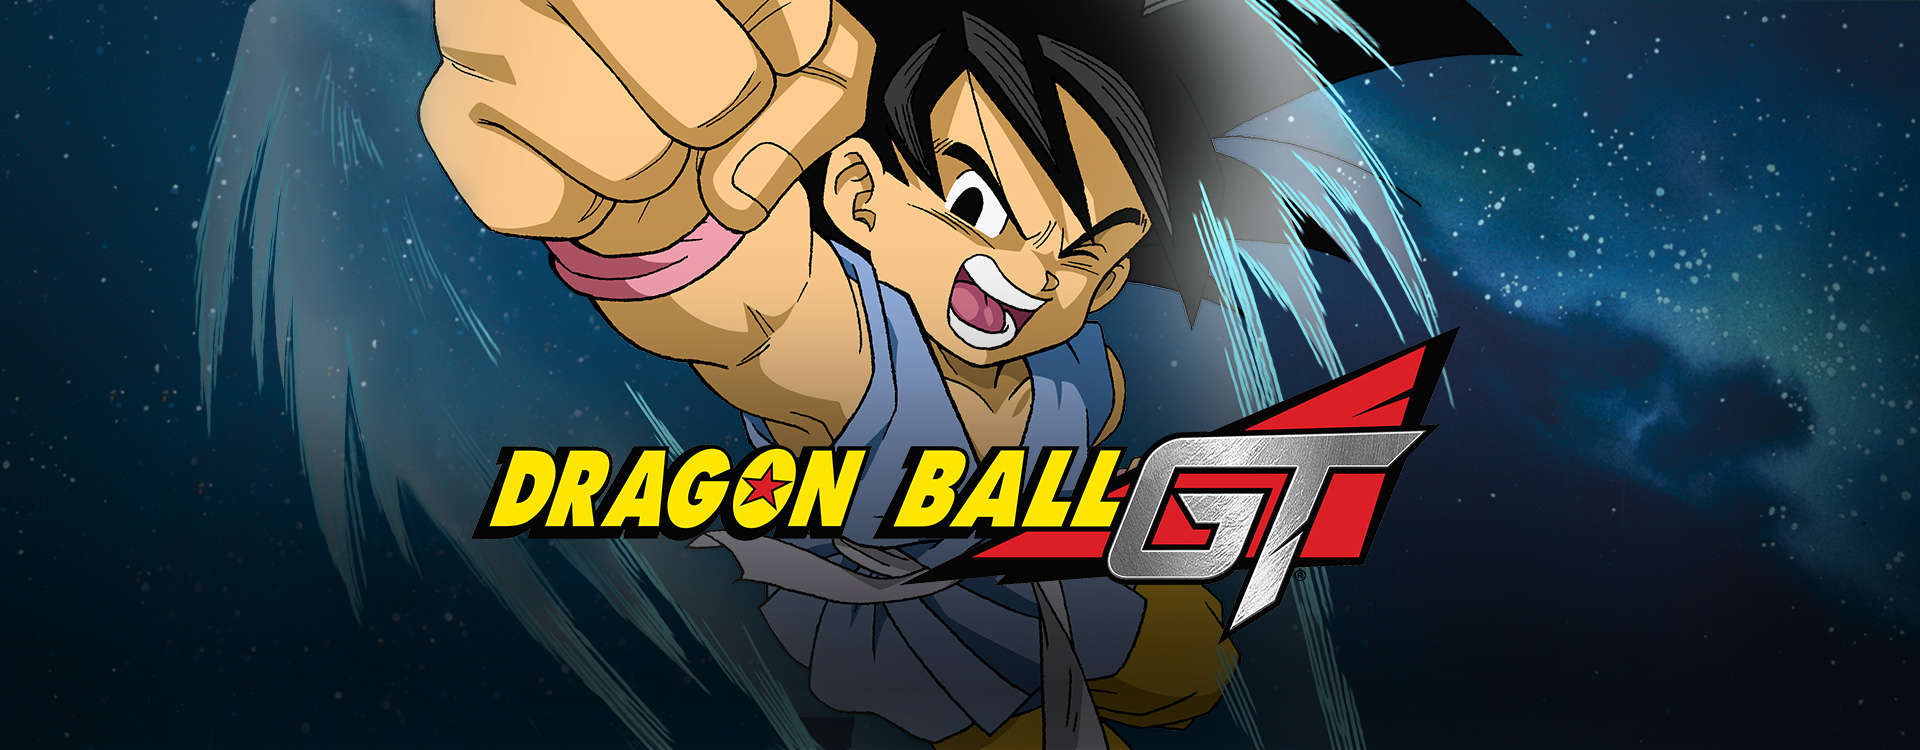 download dragon ball gt episodes english torrent